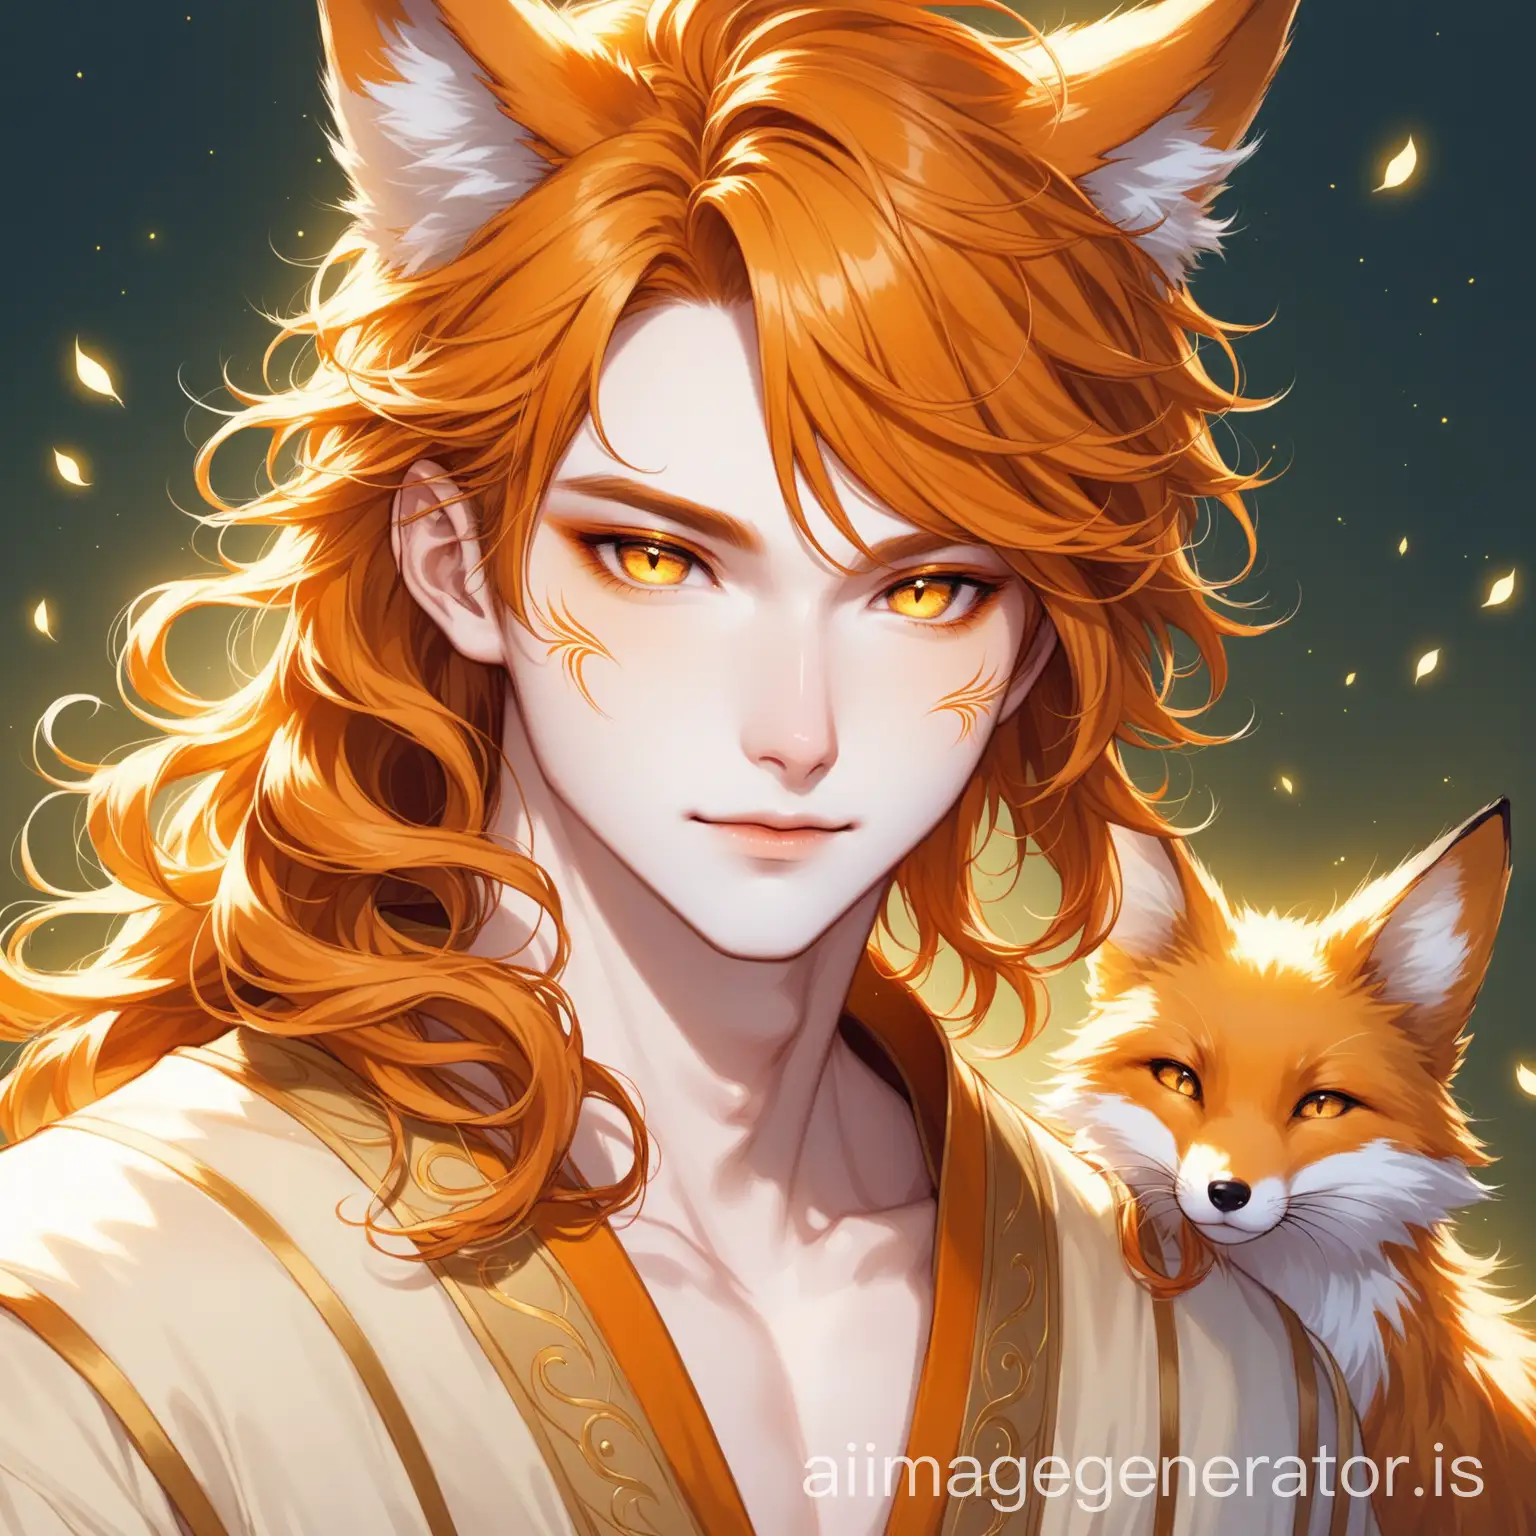 Fox demi-human, ethereal, beautiful, pale skin, striking golden eyes, golden whiskers on cheeks, male, curly orange hair, fox ears.